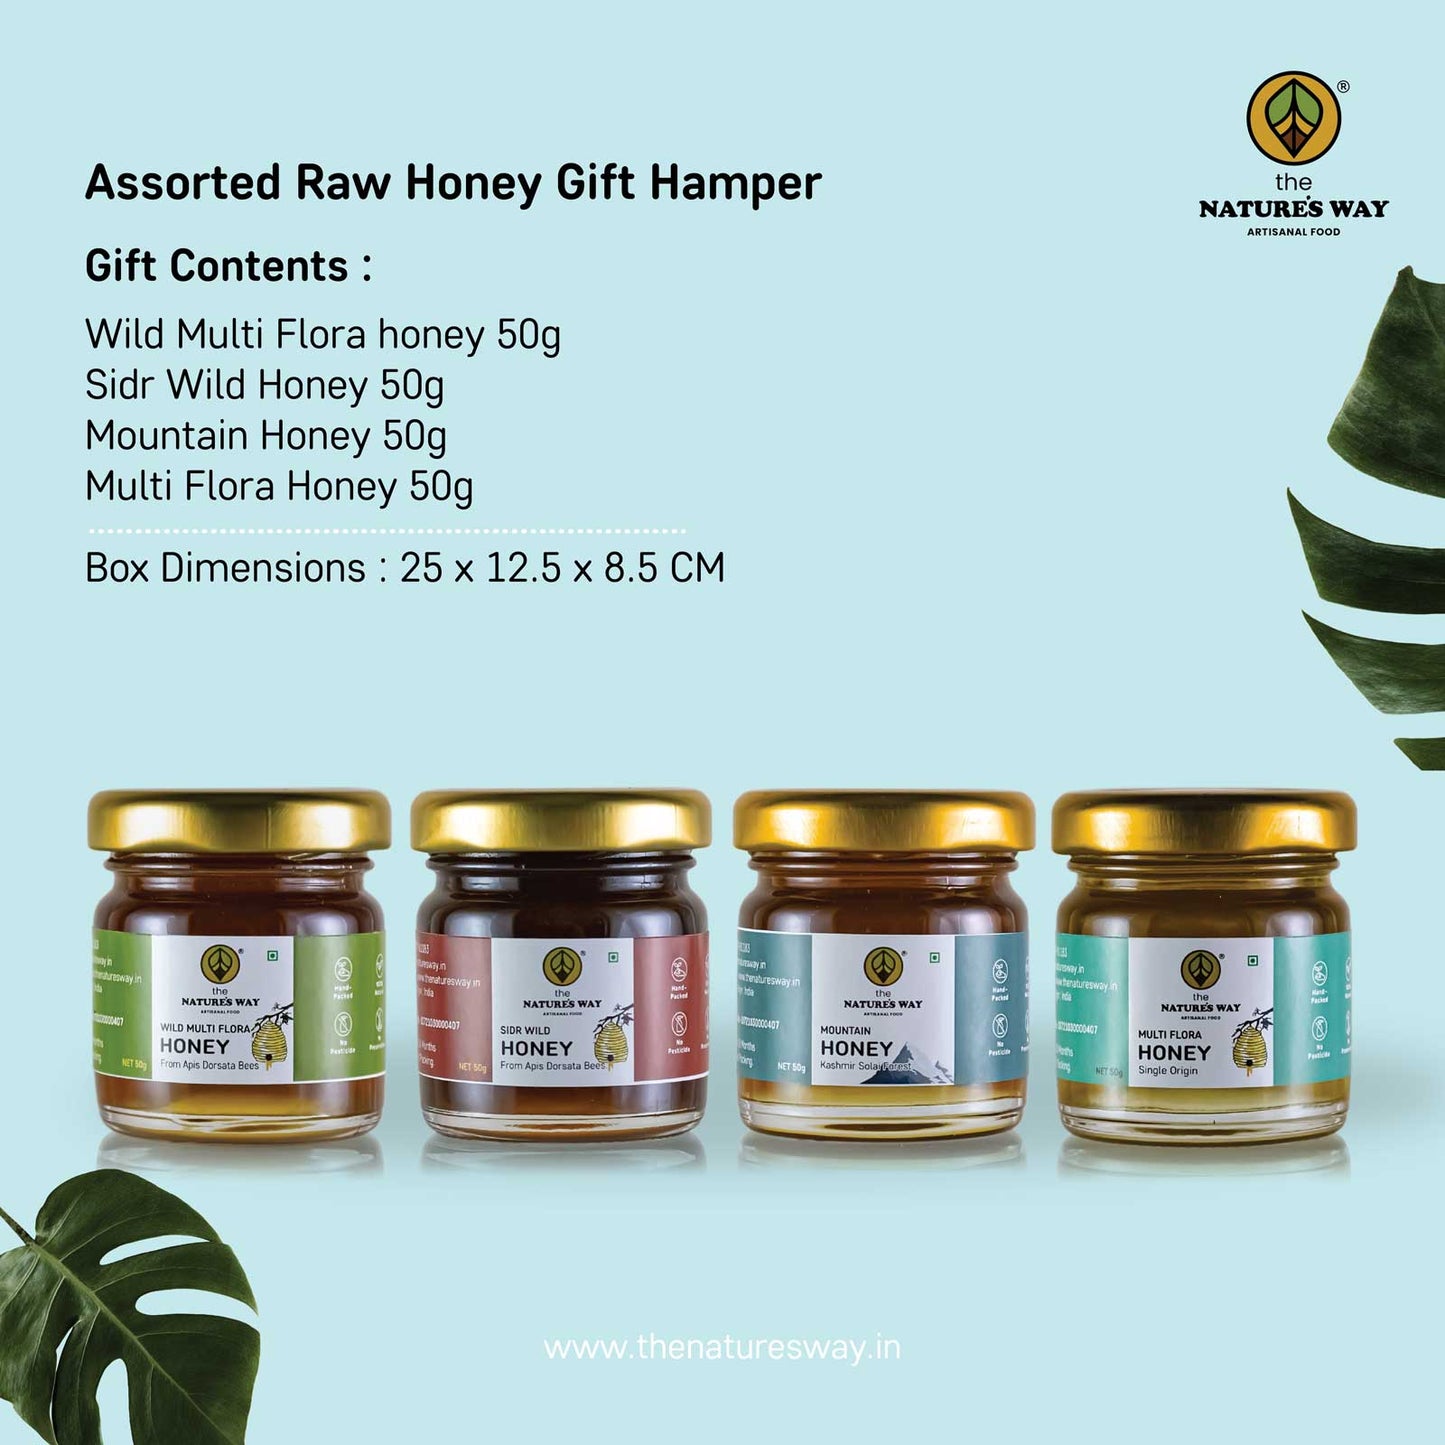 Assorted Raw Honey Gift Hamper